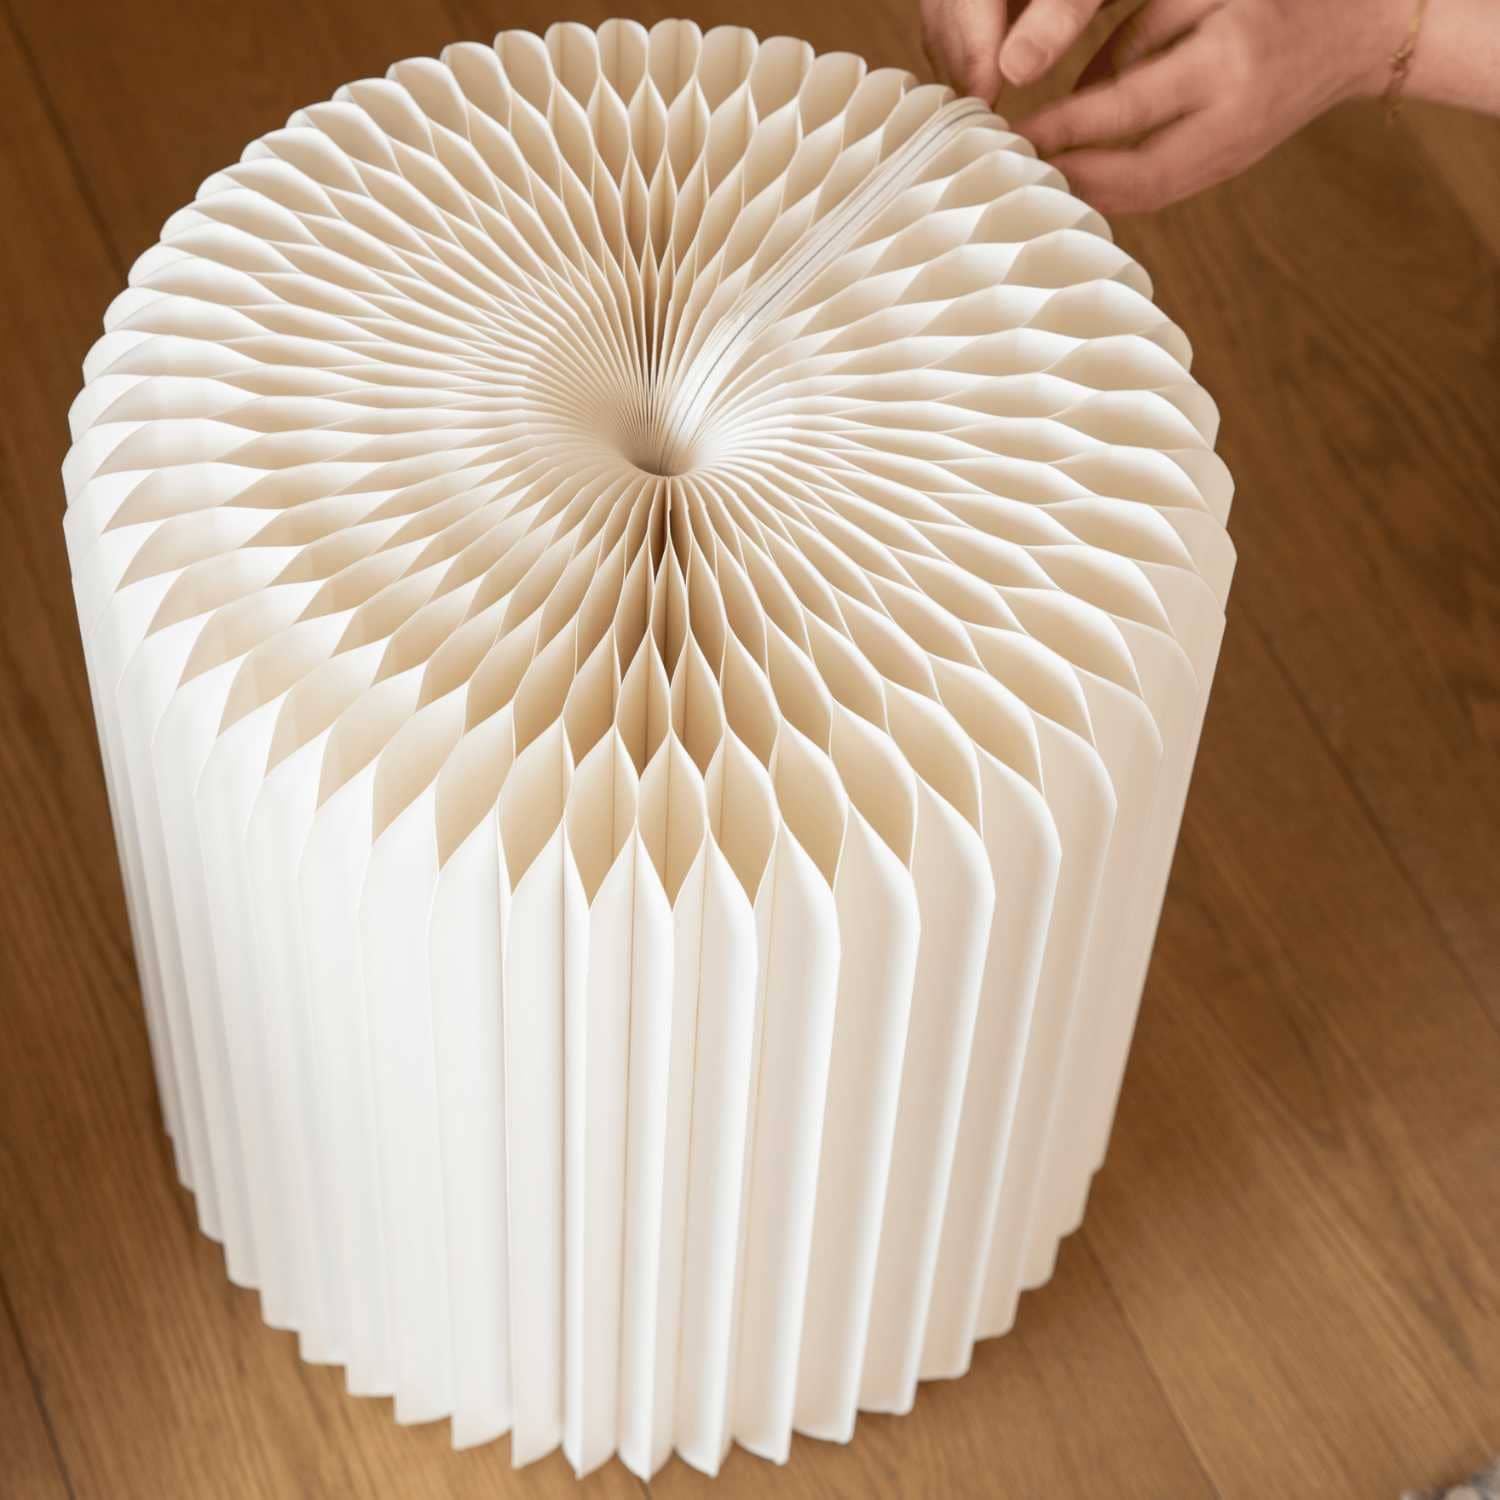 step 3 stool white unfolded honeycomb design visible